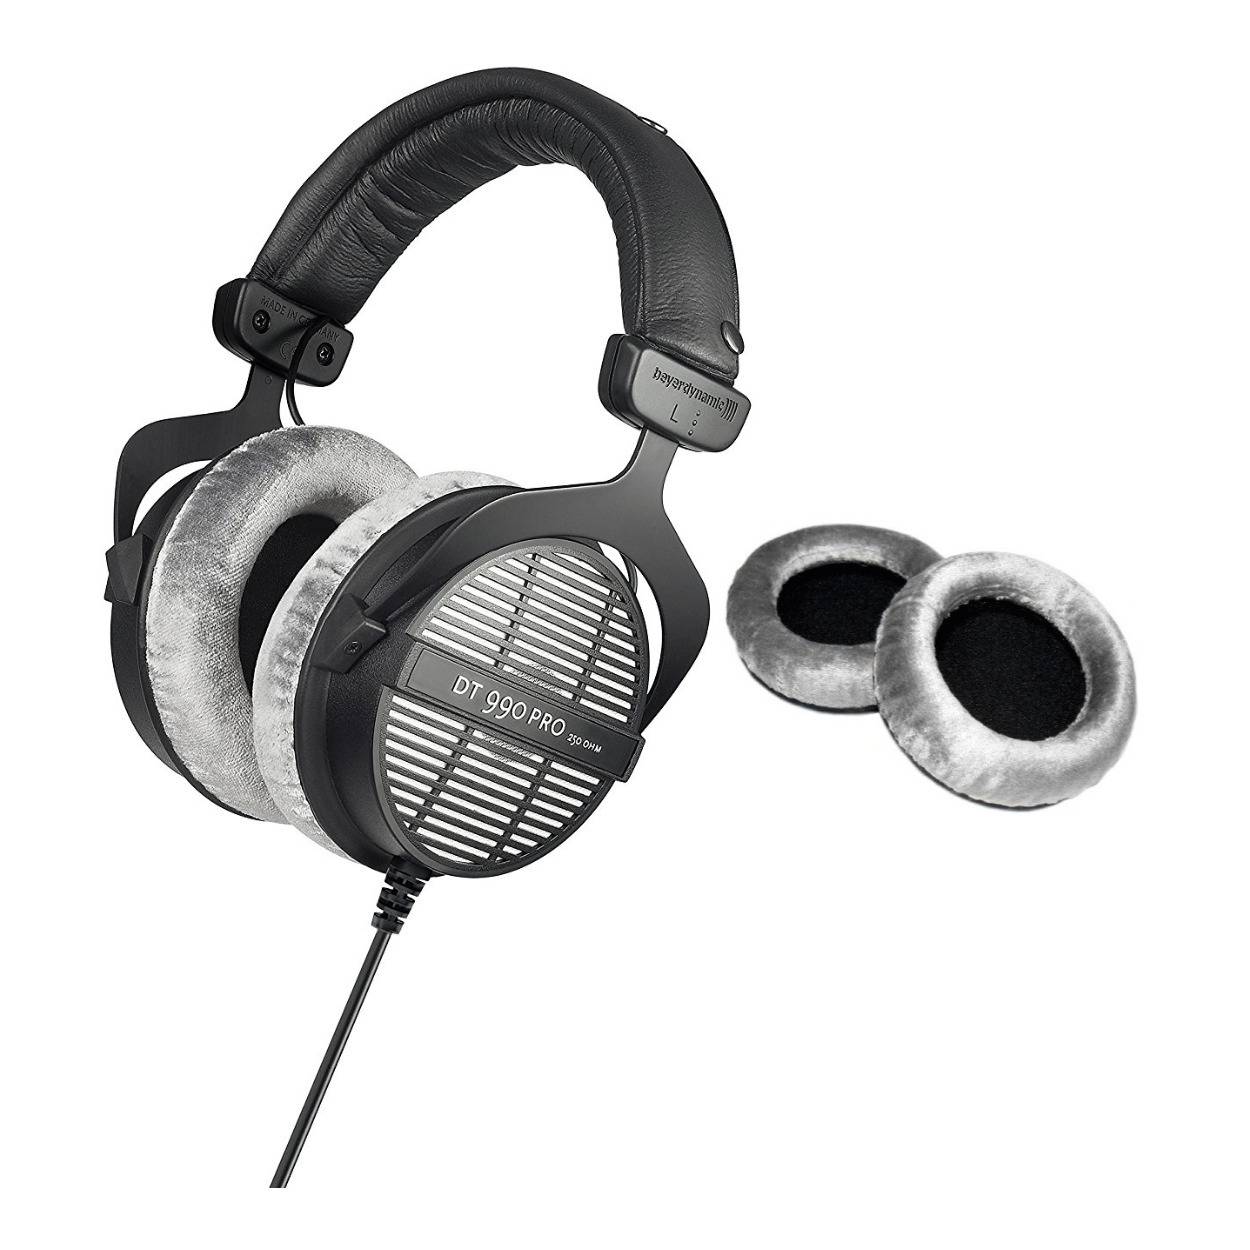 Beyerdynamic DT-990 Pro Open-Ear Headphones (250 Ohms) with Extra Set of Earpads